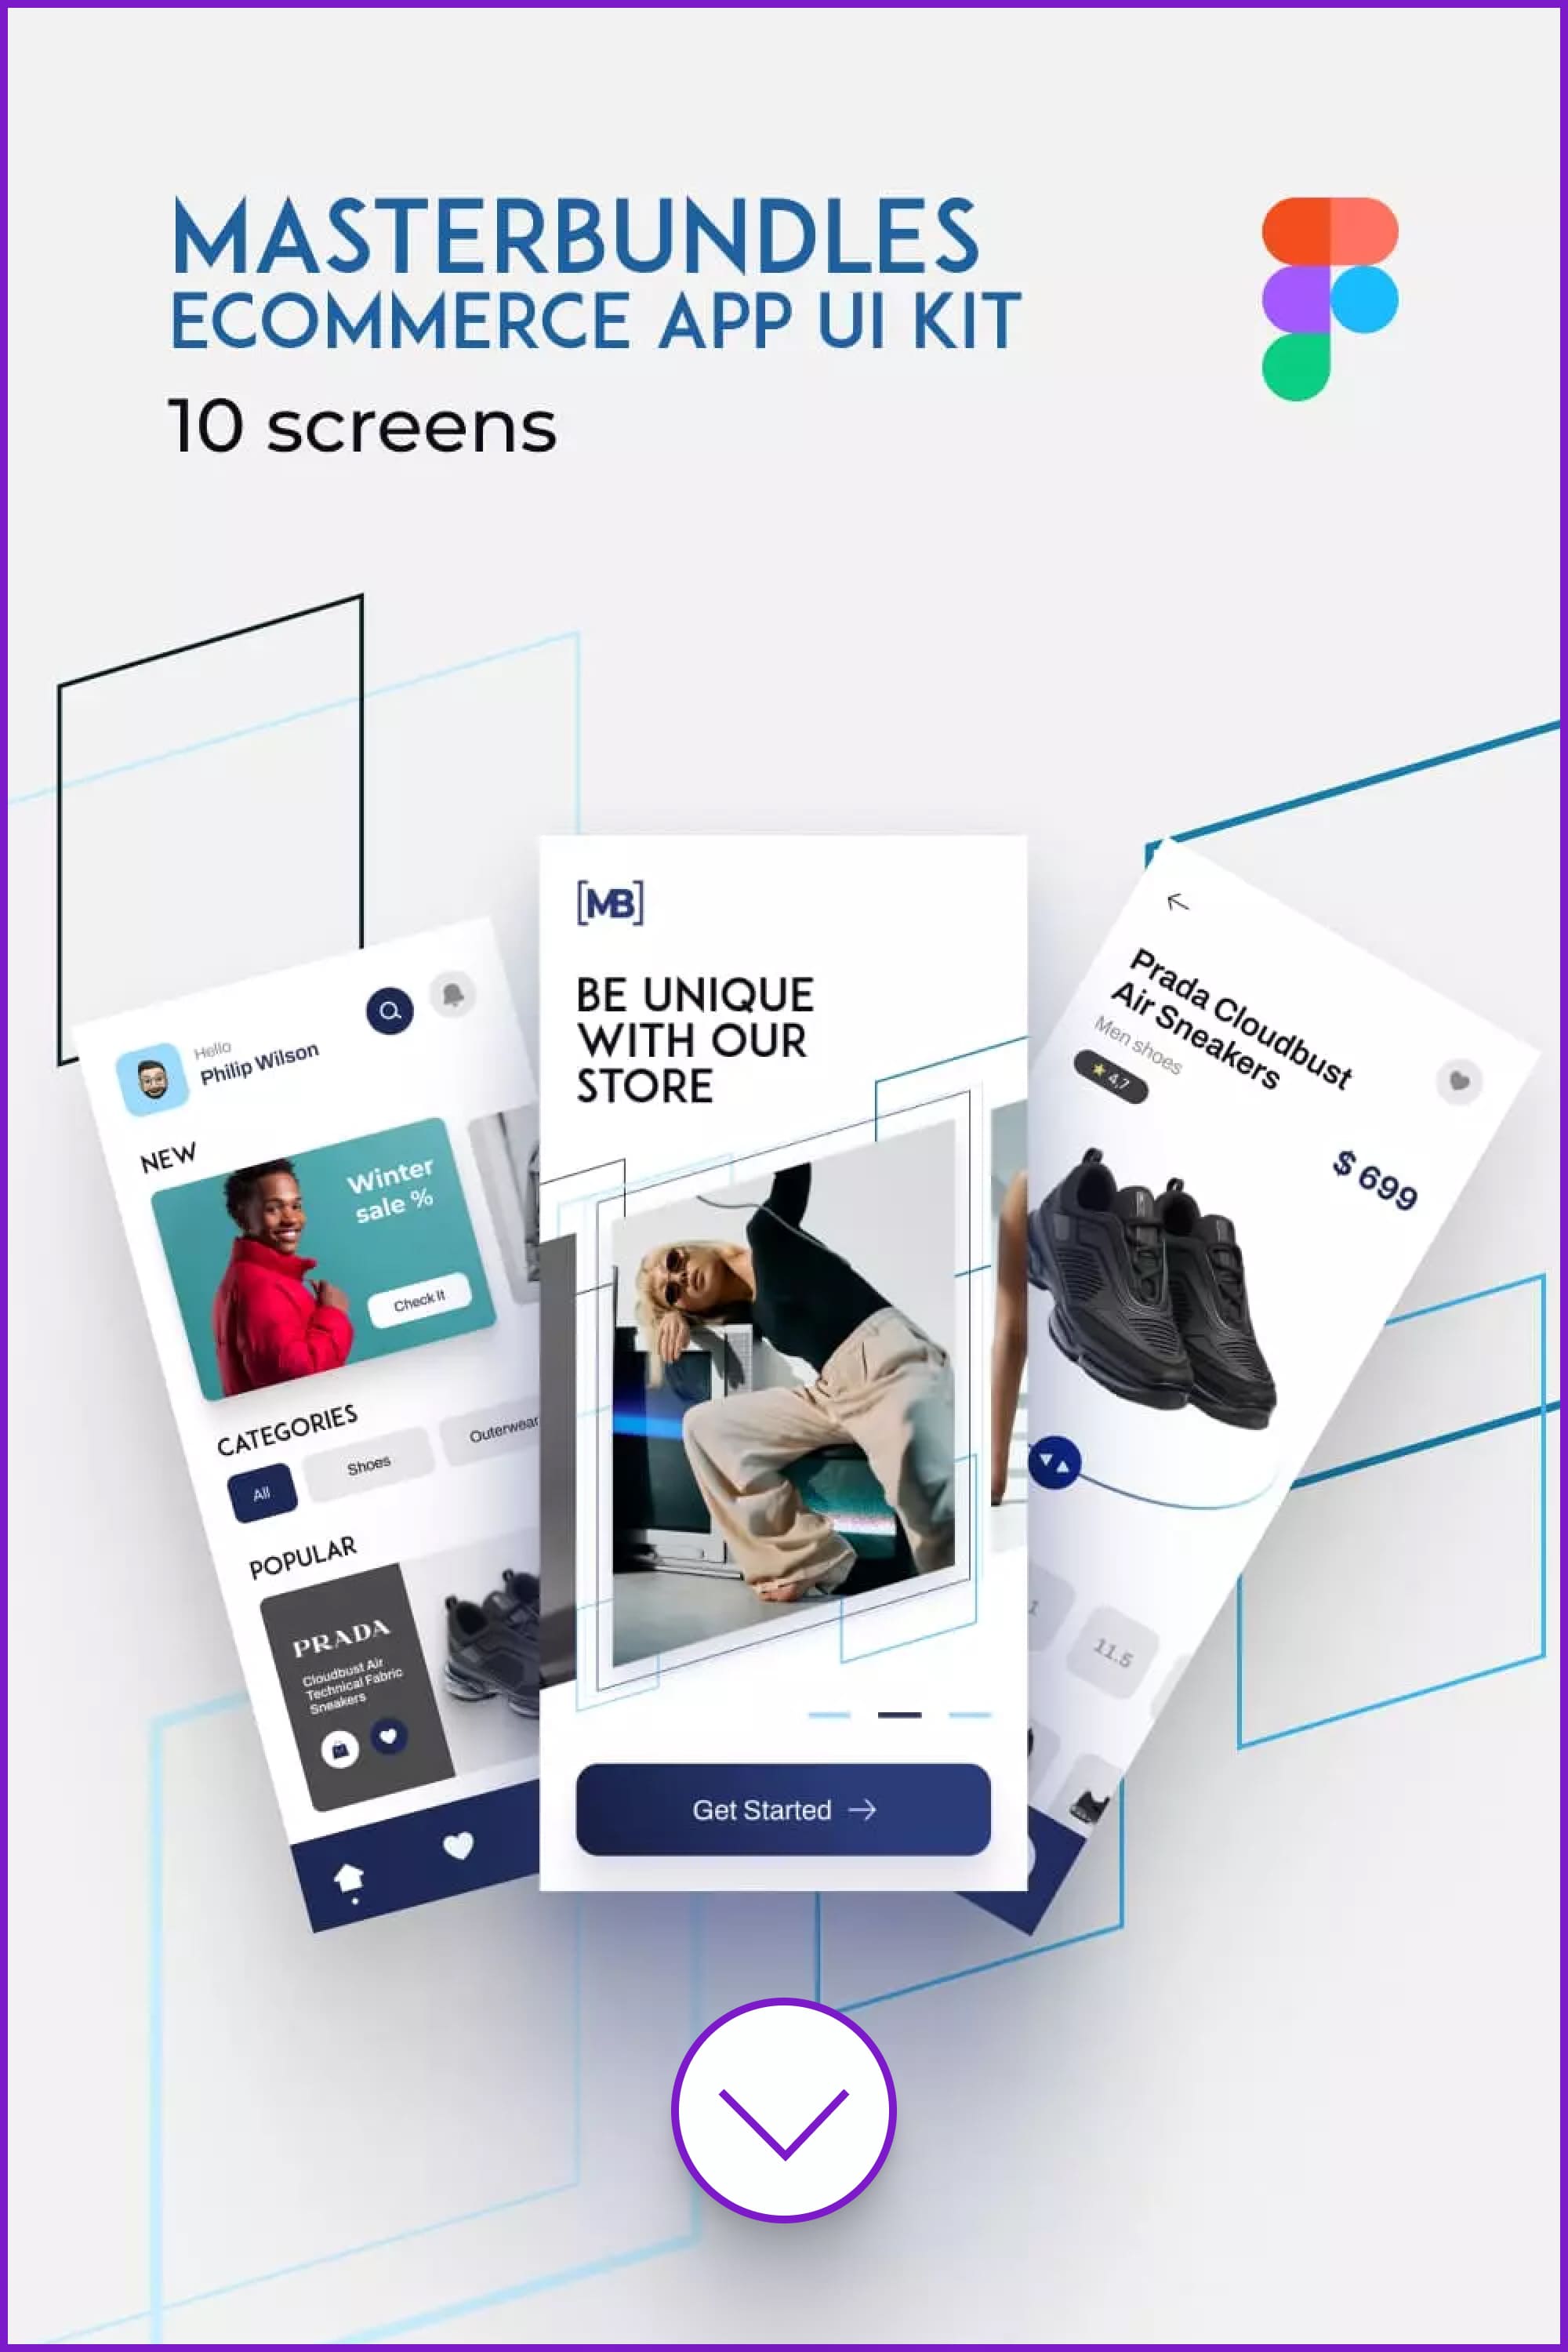 Screenshots of app for e-commerce.